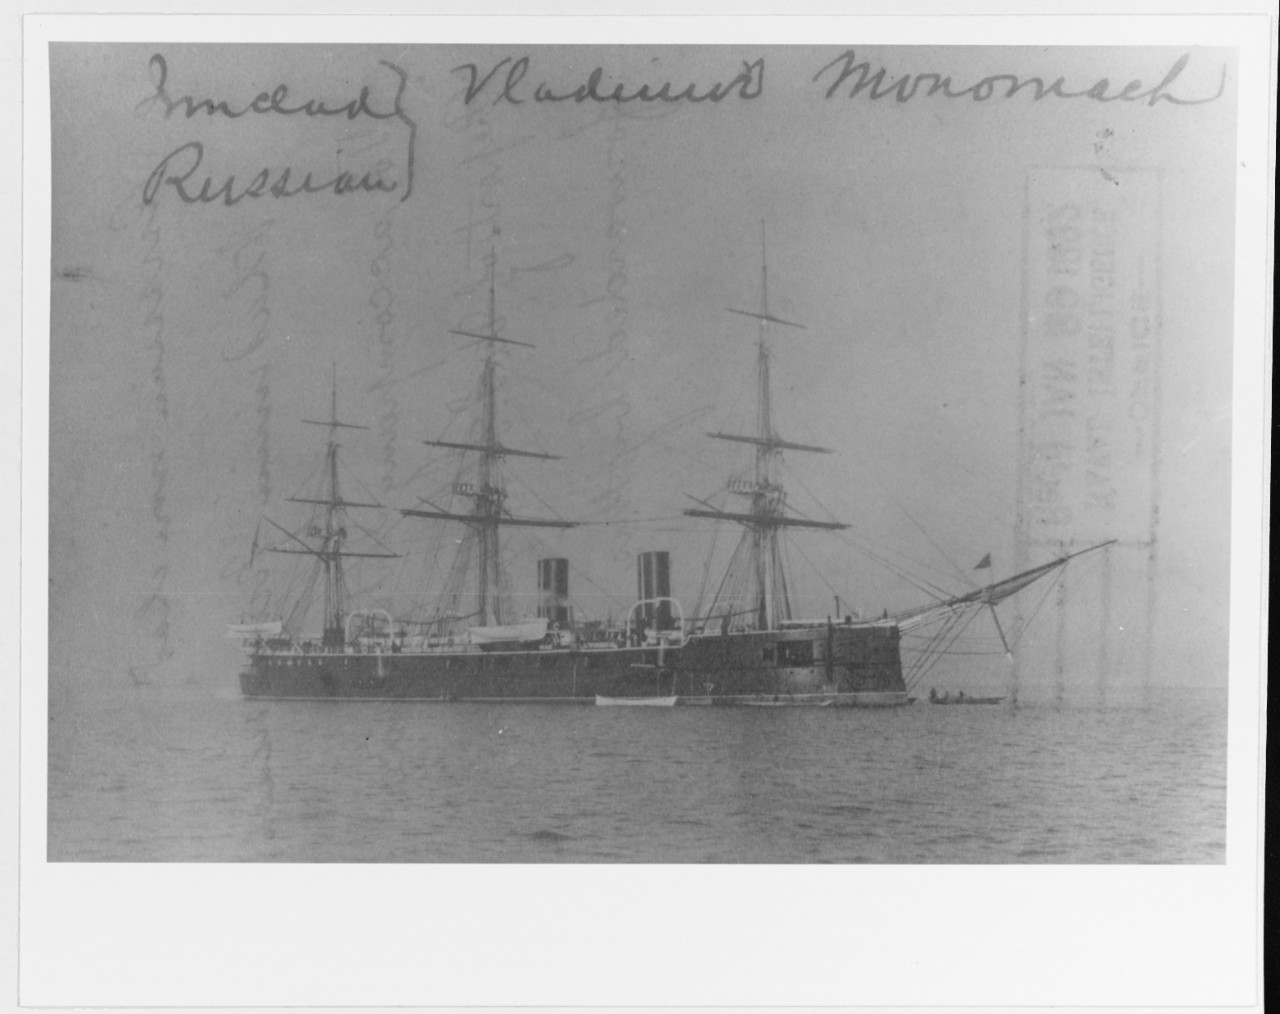 VLADIMIR MONOMAKH (Russian armored cruiser, 1882-1905)